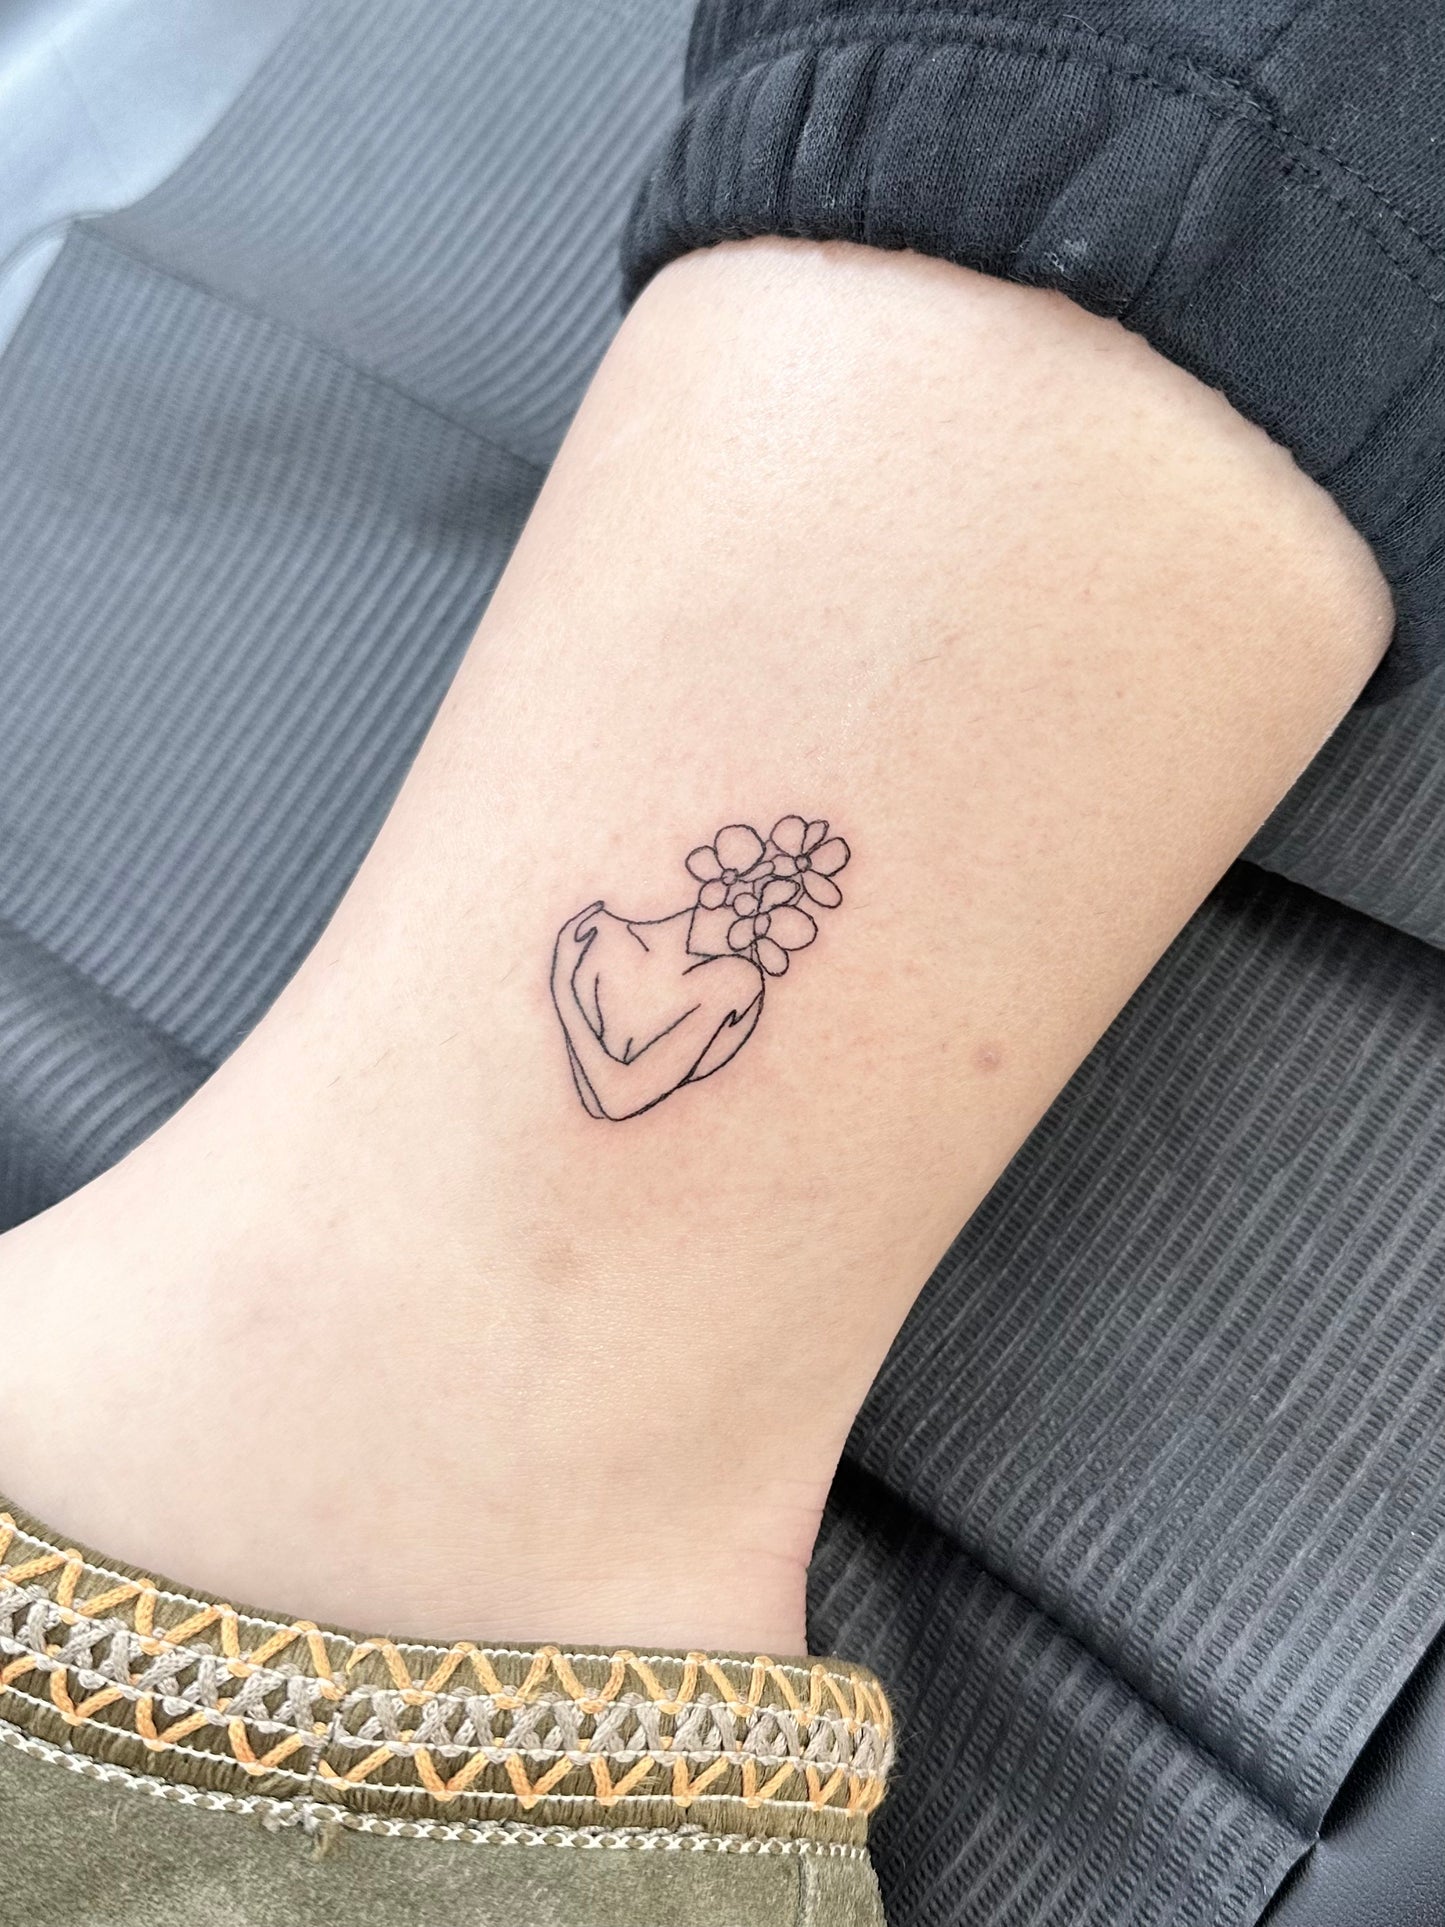 Tiny Tattoo Artistry Training Course